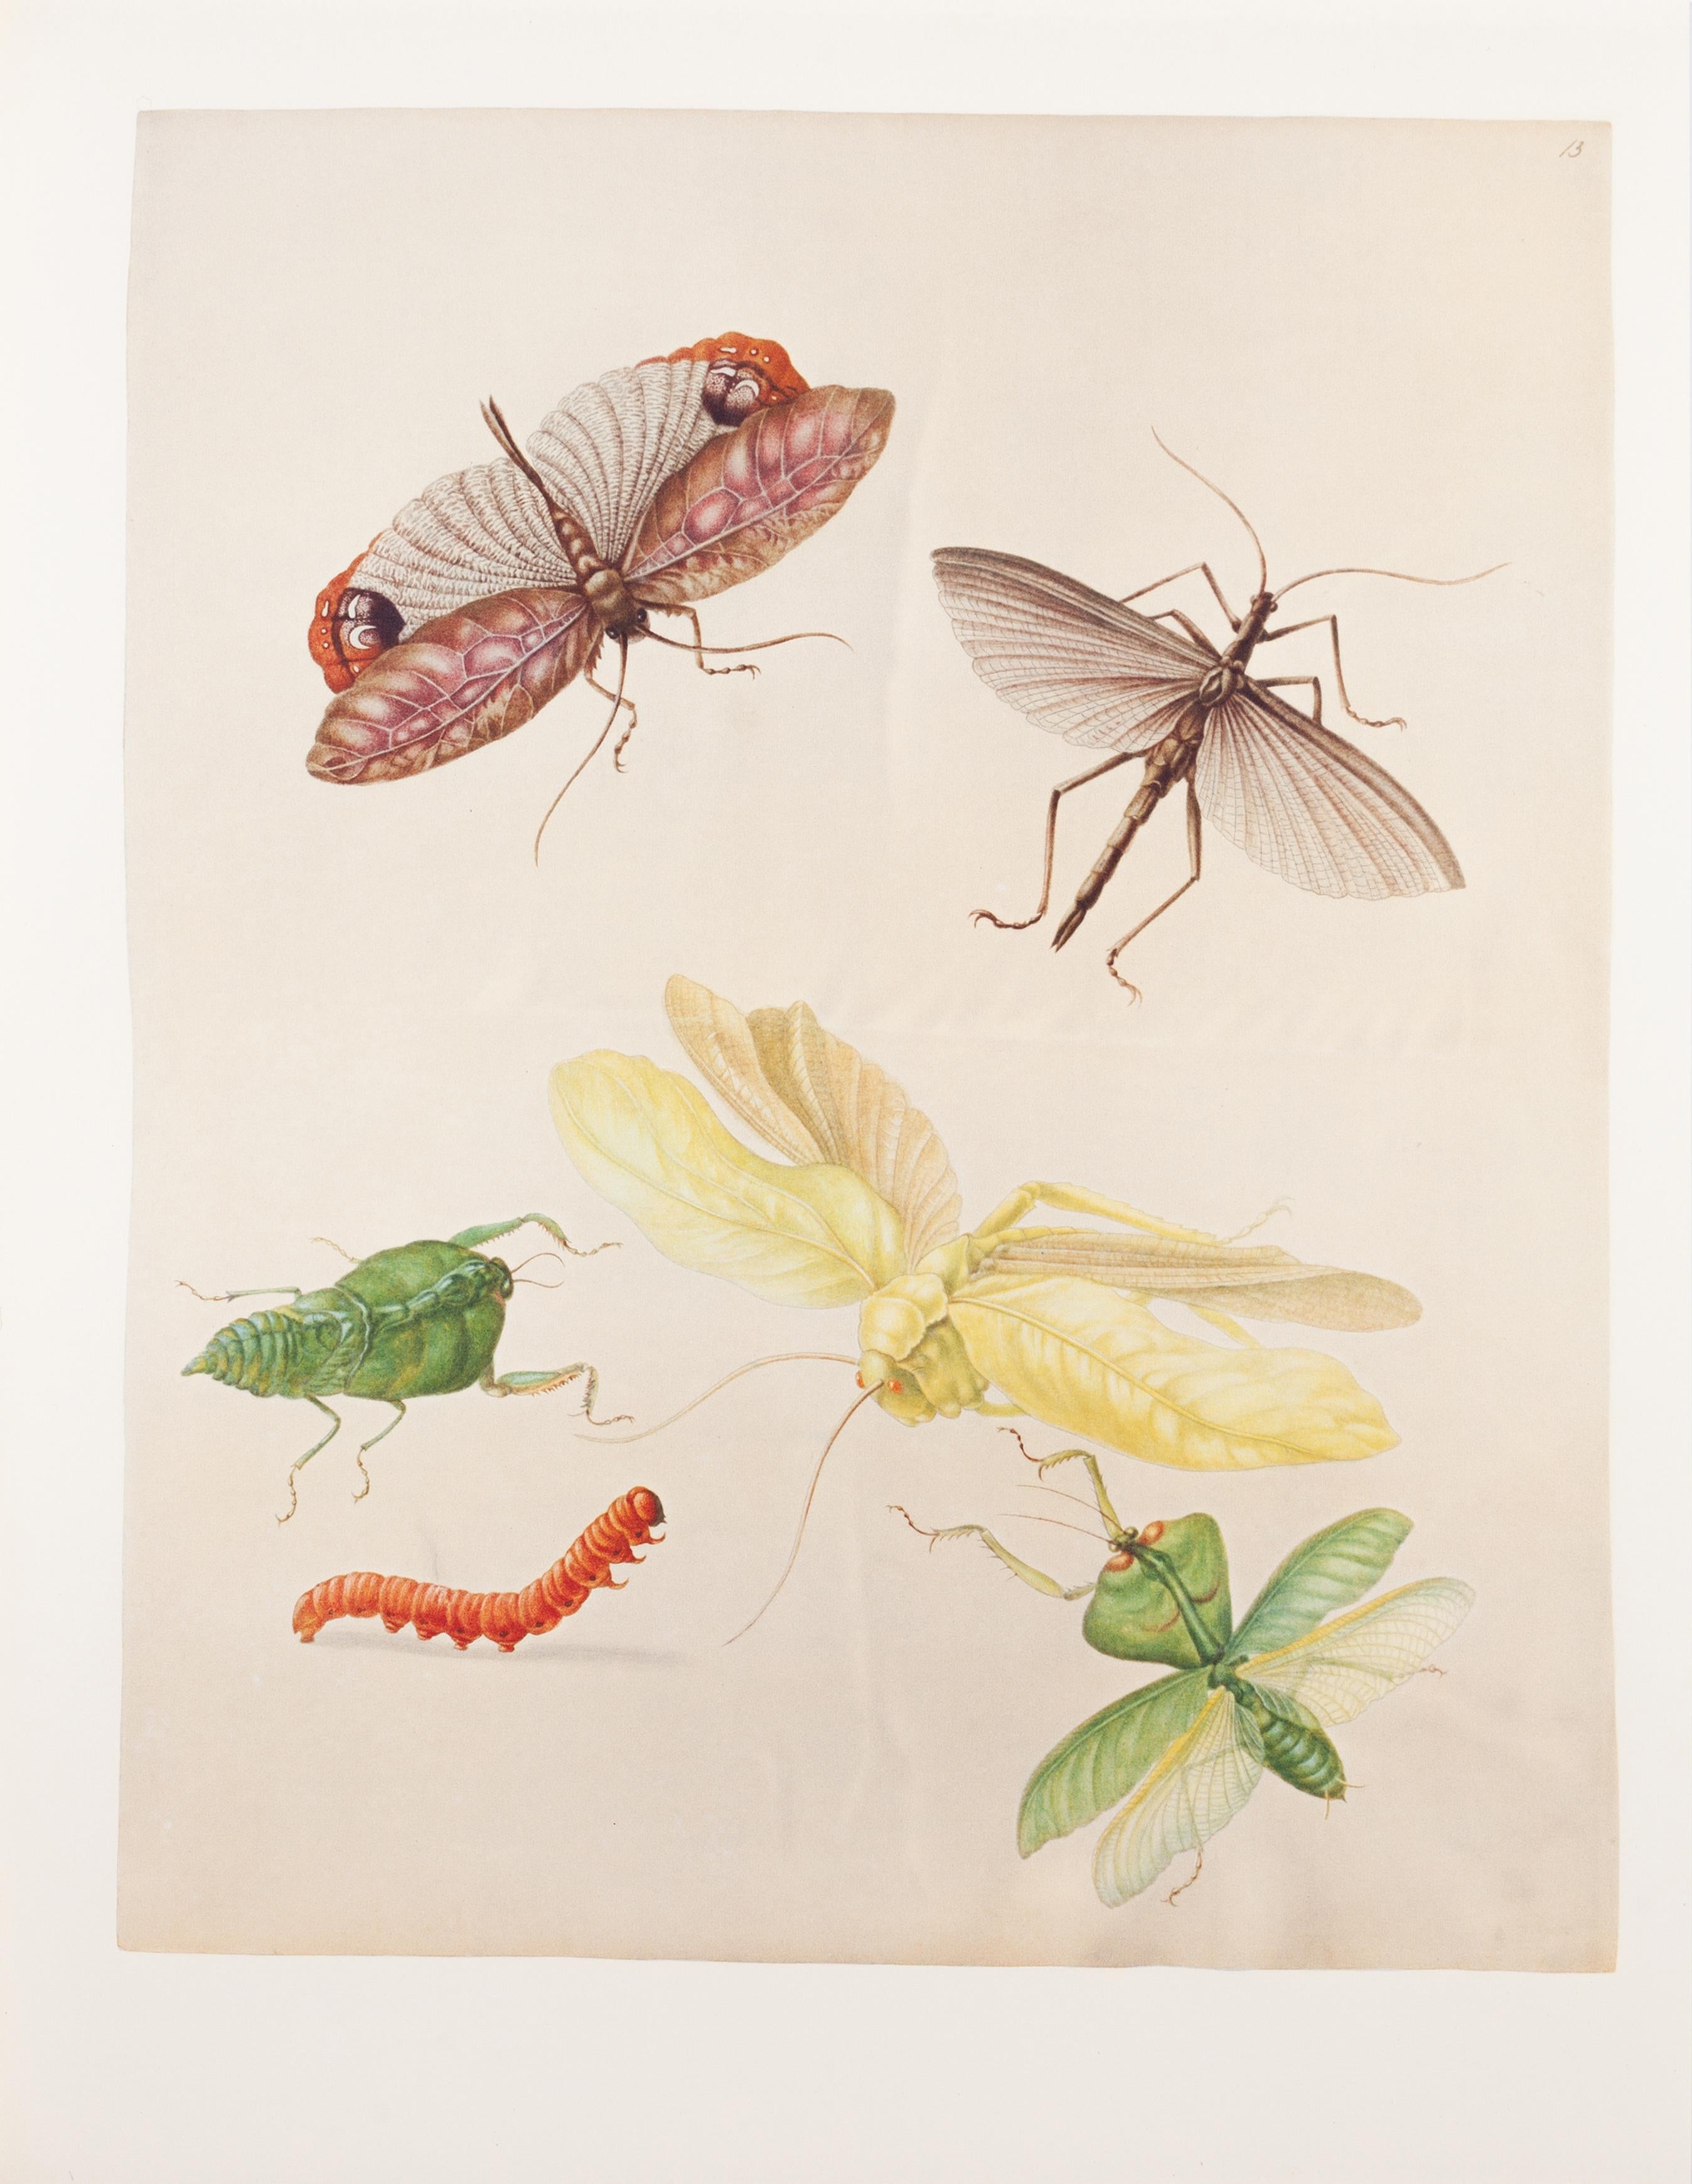 28. Saltatoria Mantis - Print by Maria Sybilla Merian